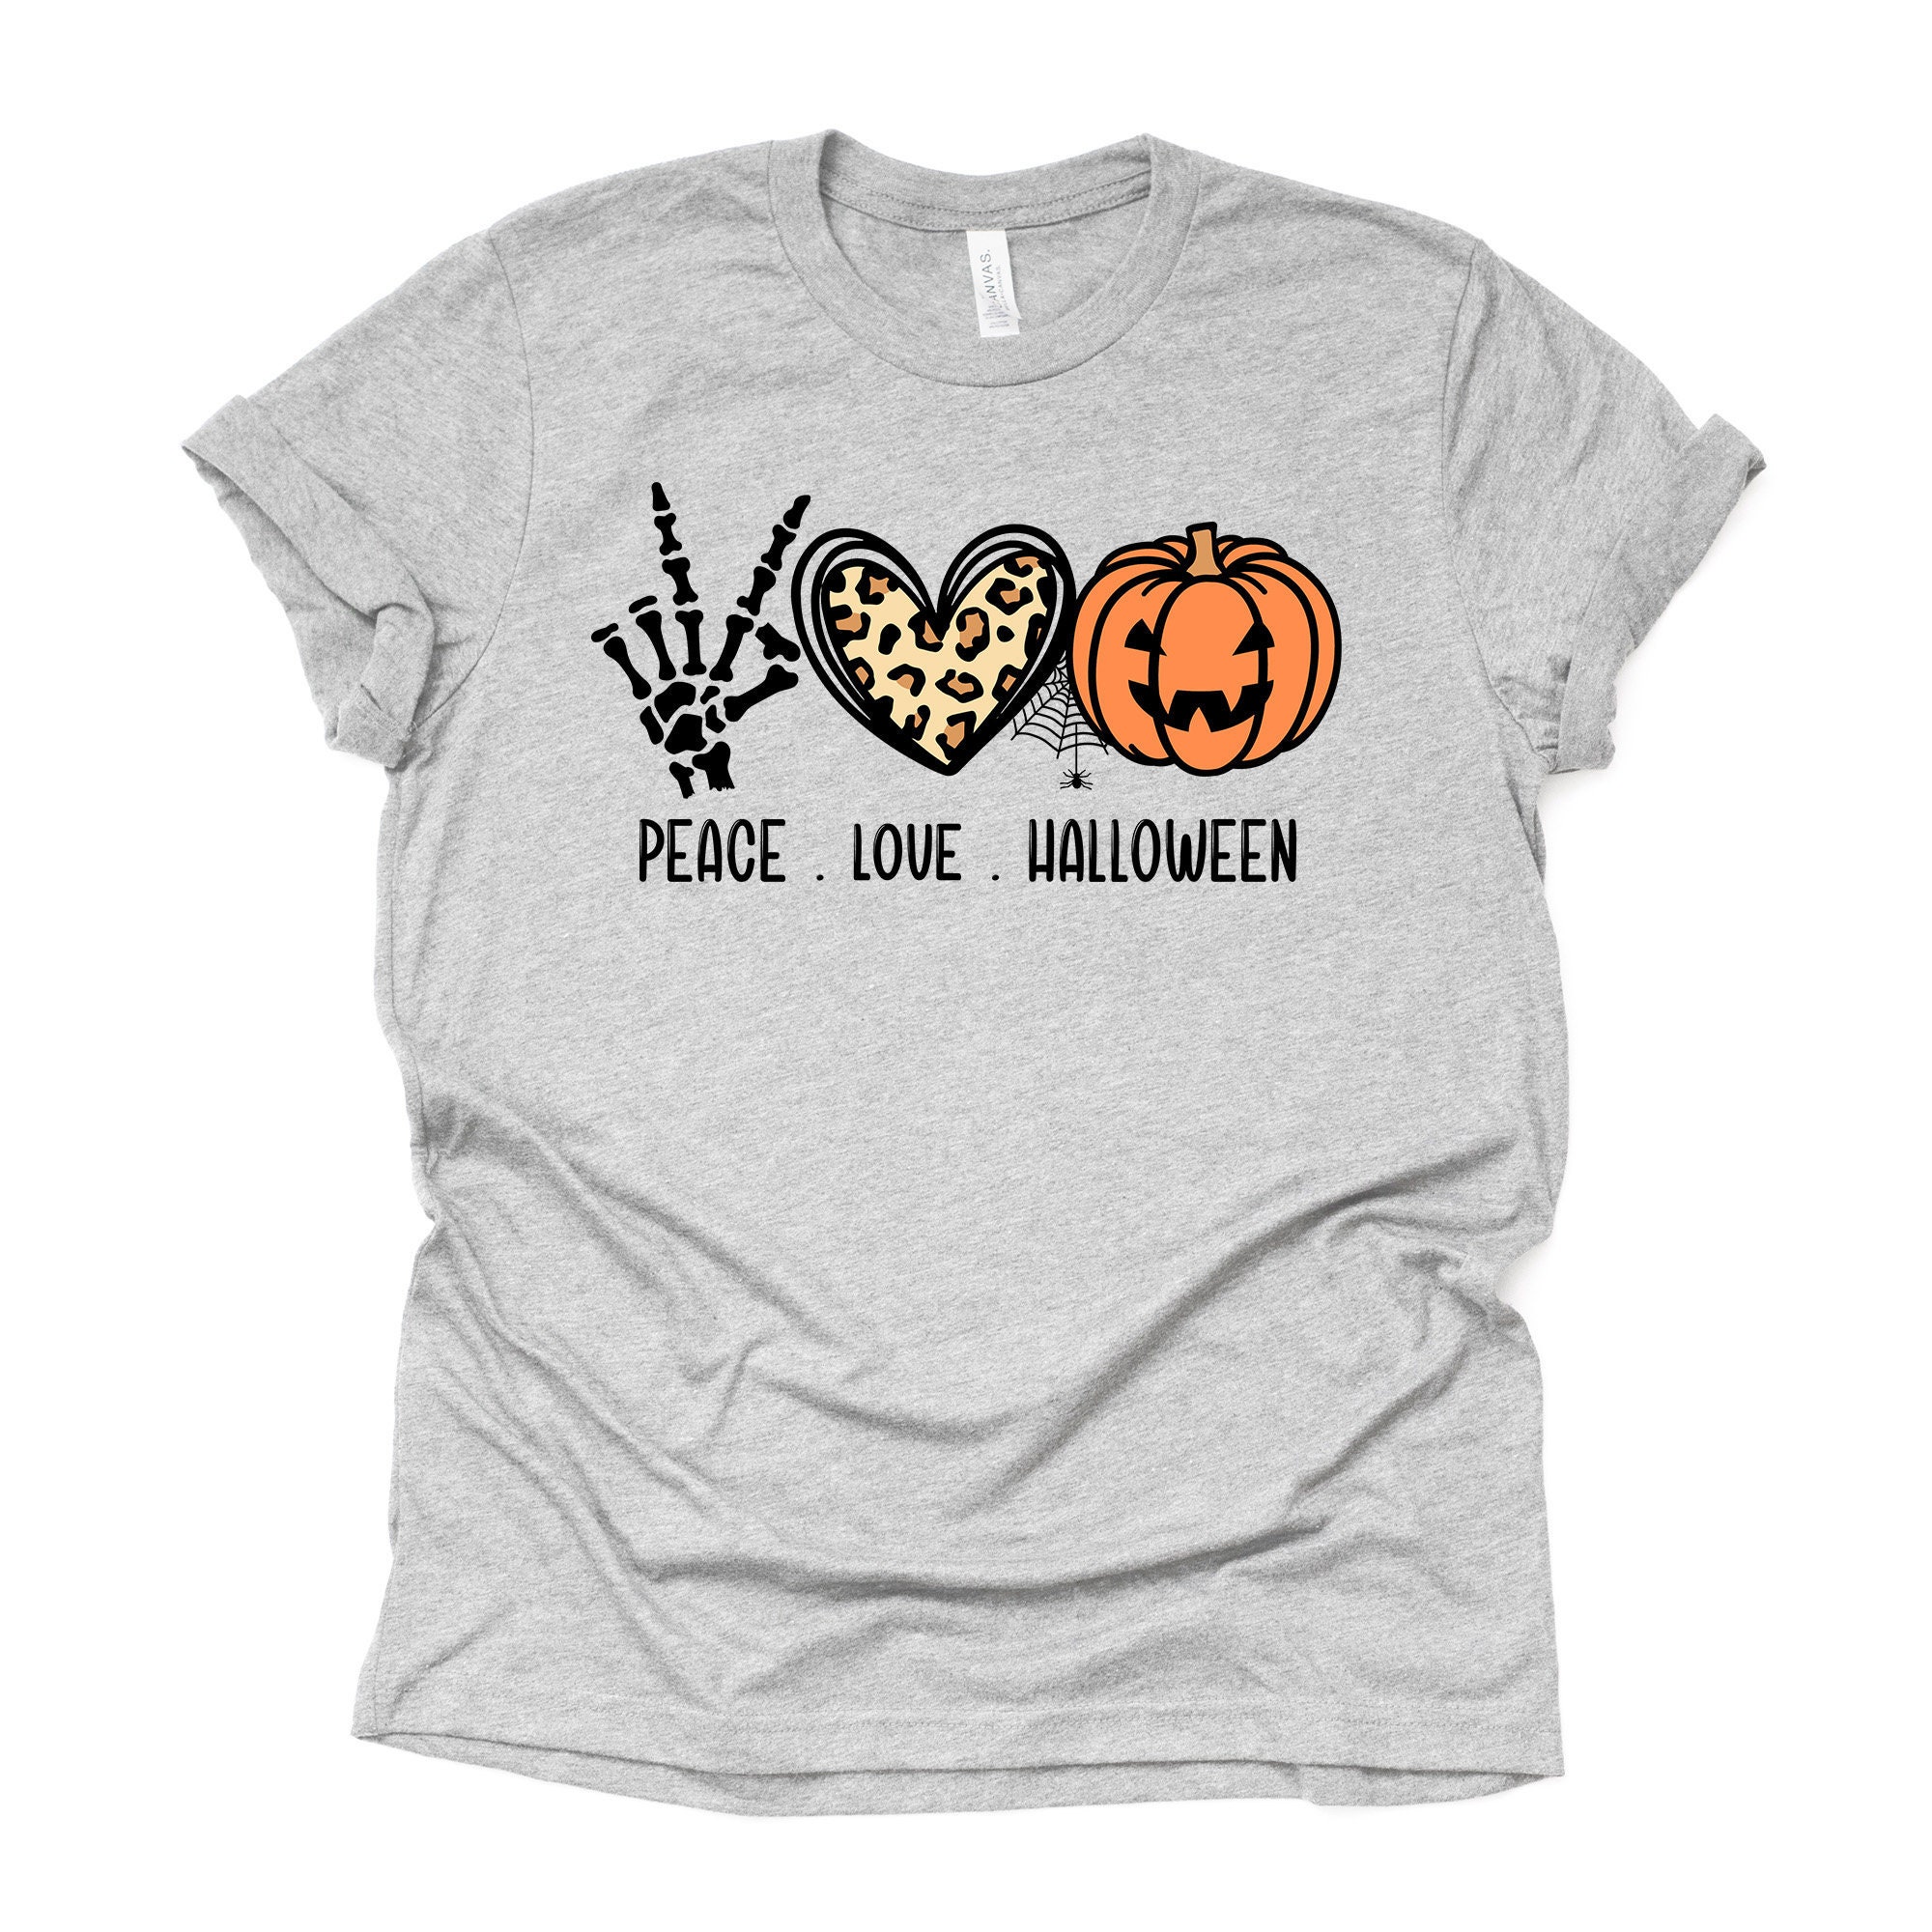 Peace Love Halloween plus sizes Halloween Tee 2x Love Halloween 4x super soft shirt 3x October 31st Design on premium unisex shirt